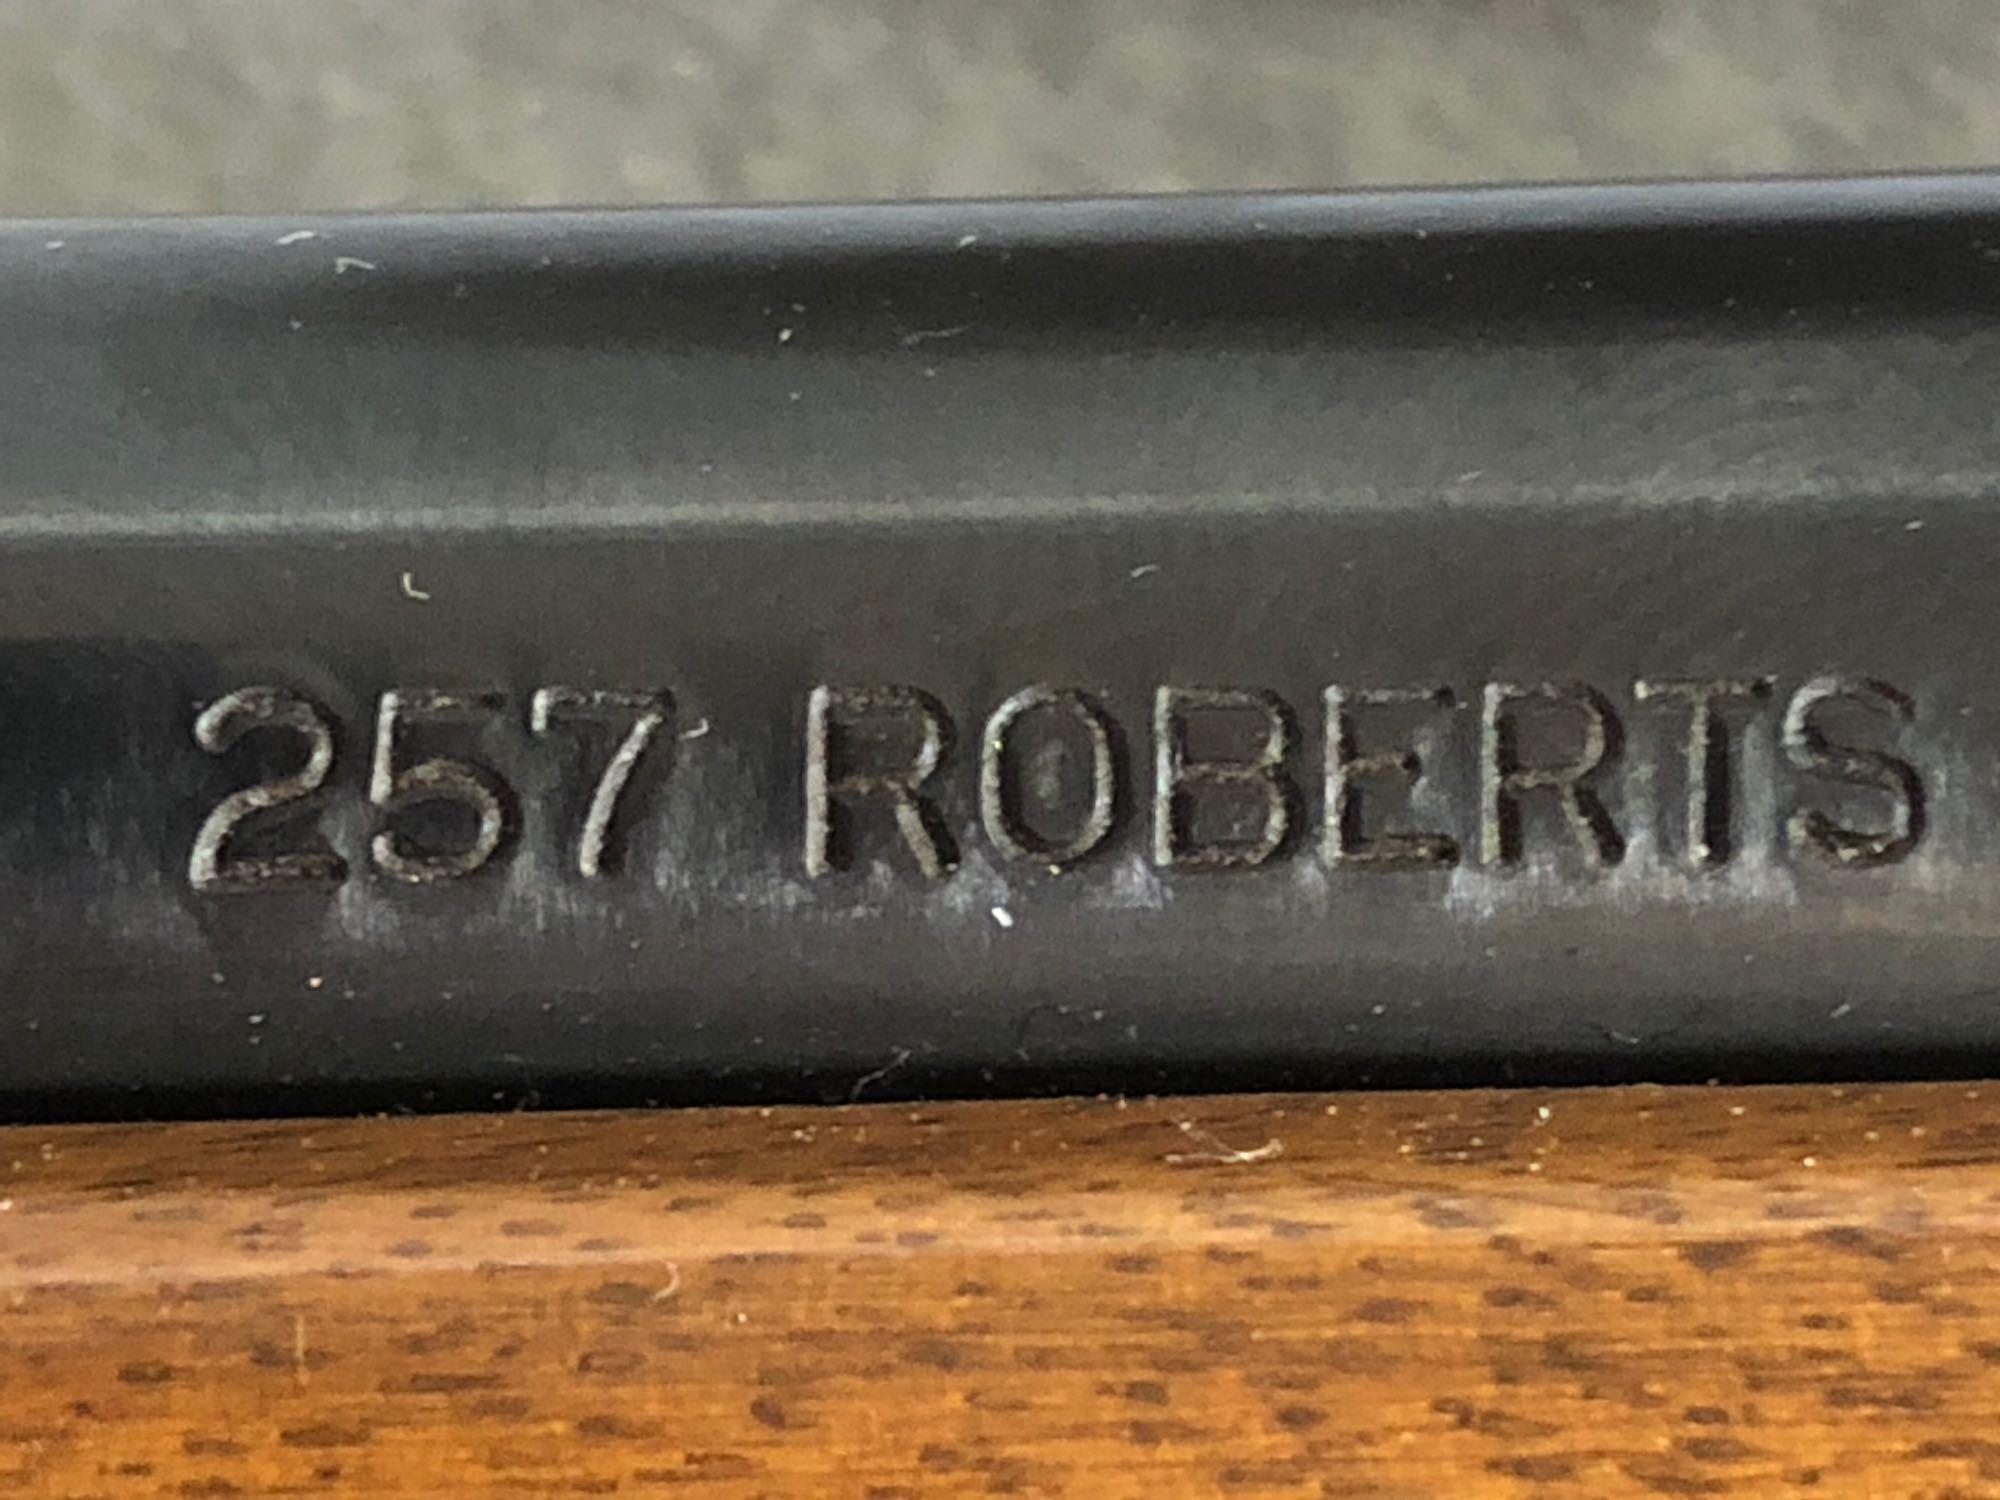 Remington Model 700 BDL Bolt Action Rifle .257 Ctg w/ Leupold M8 4x Scope S/N C6691137